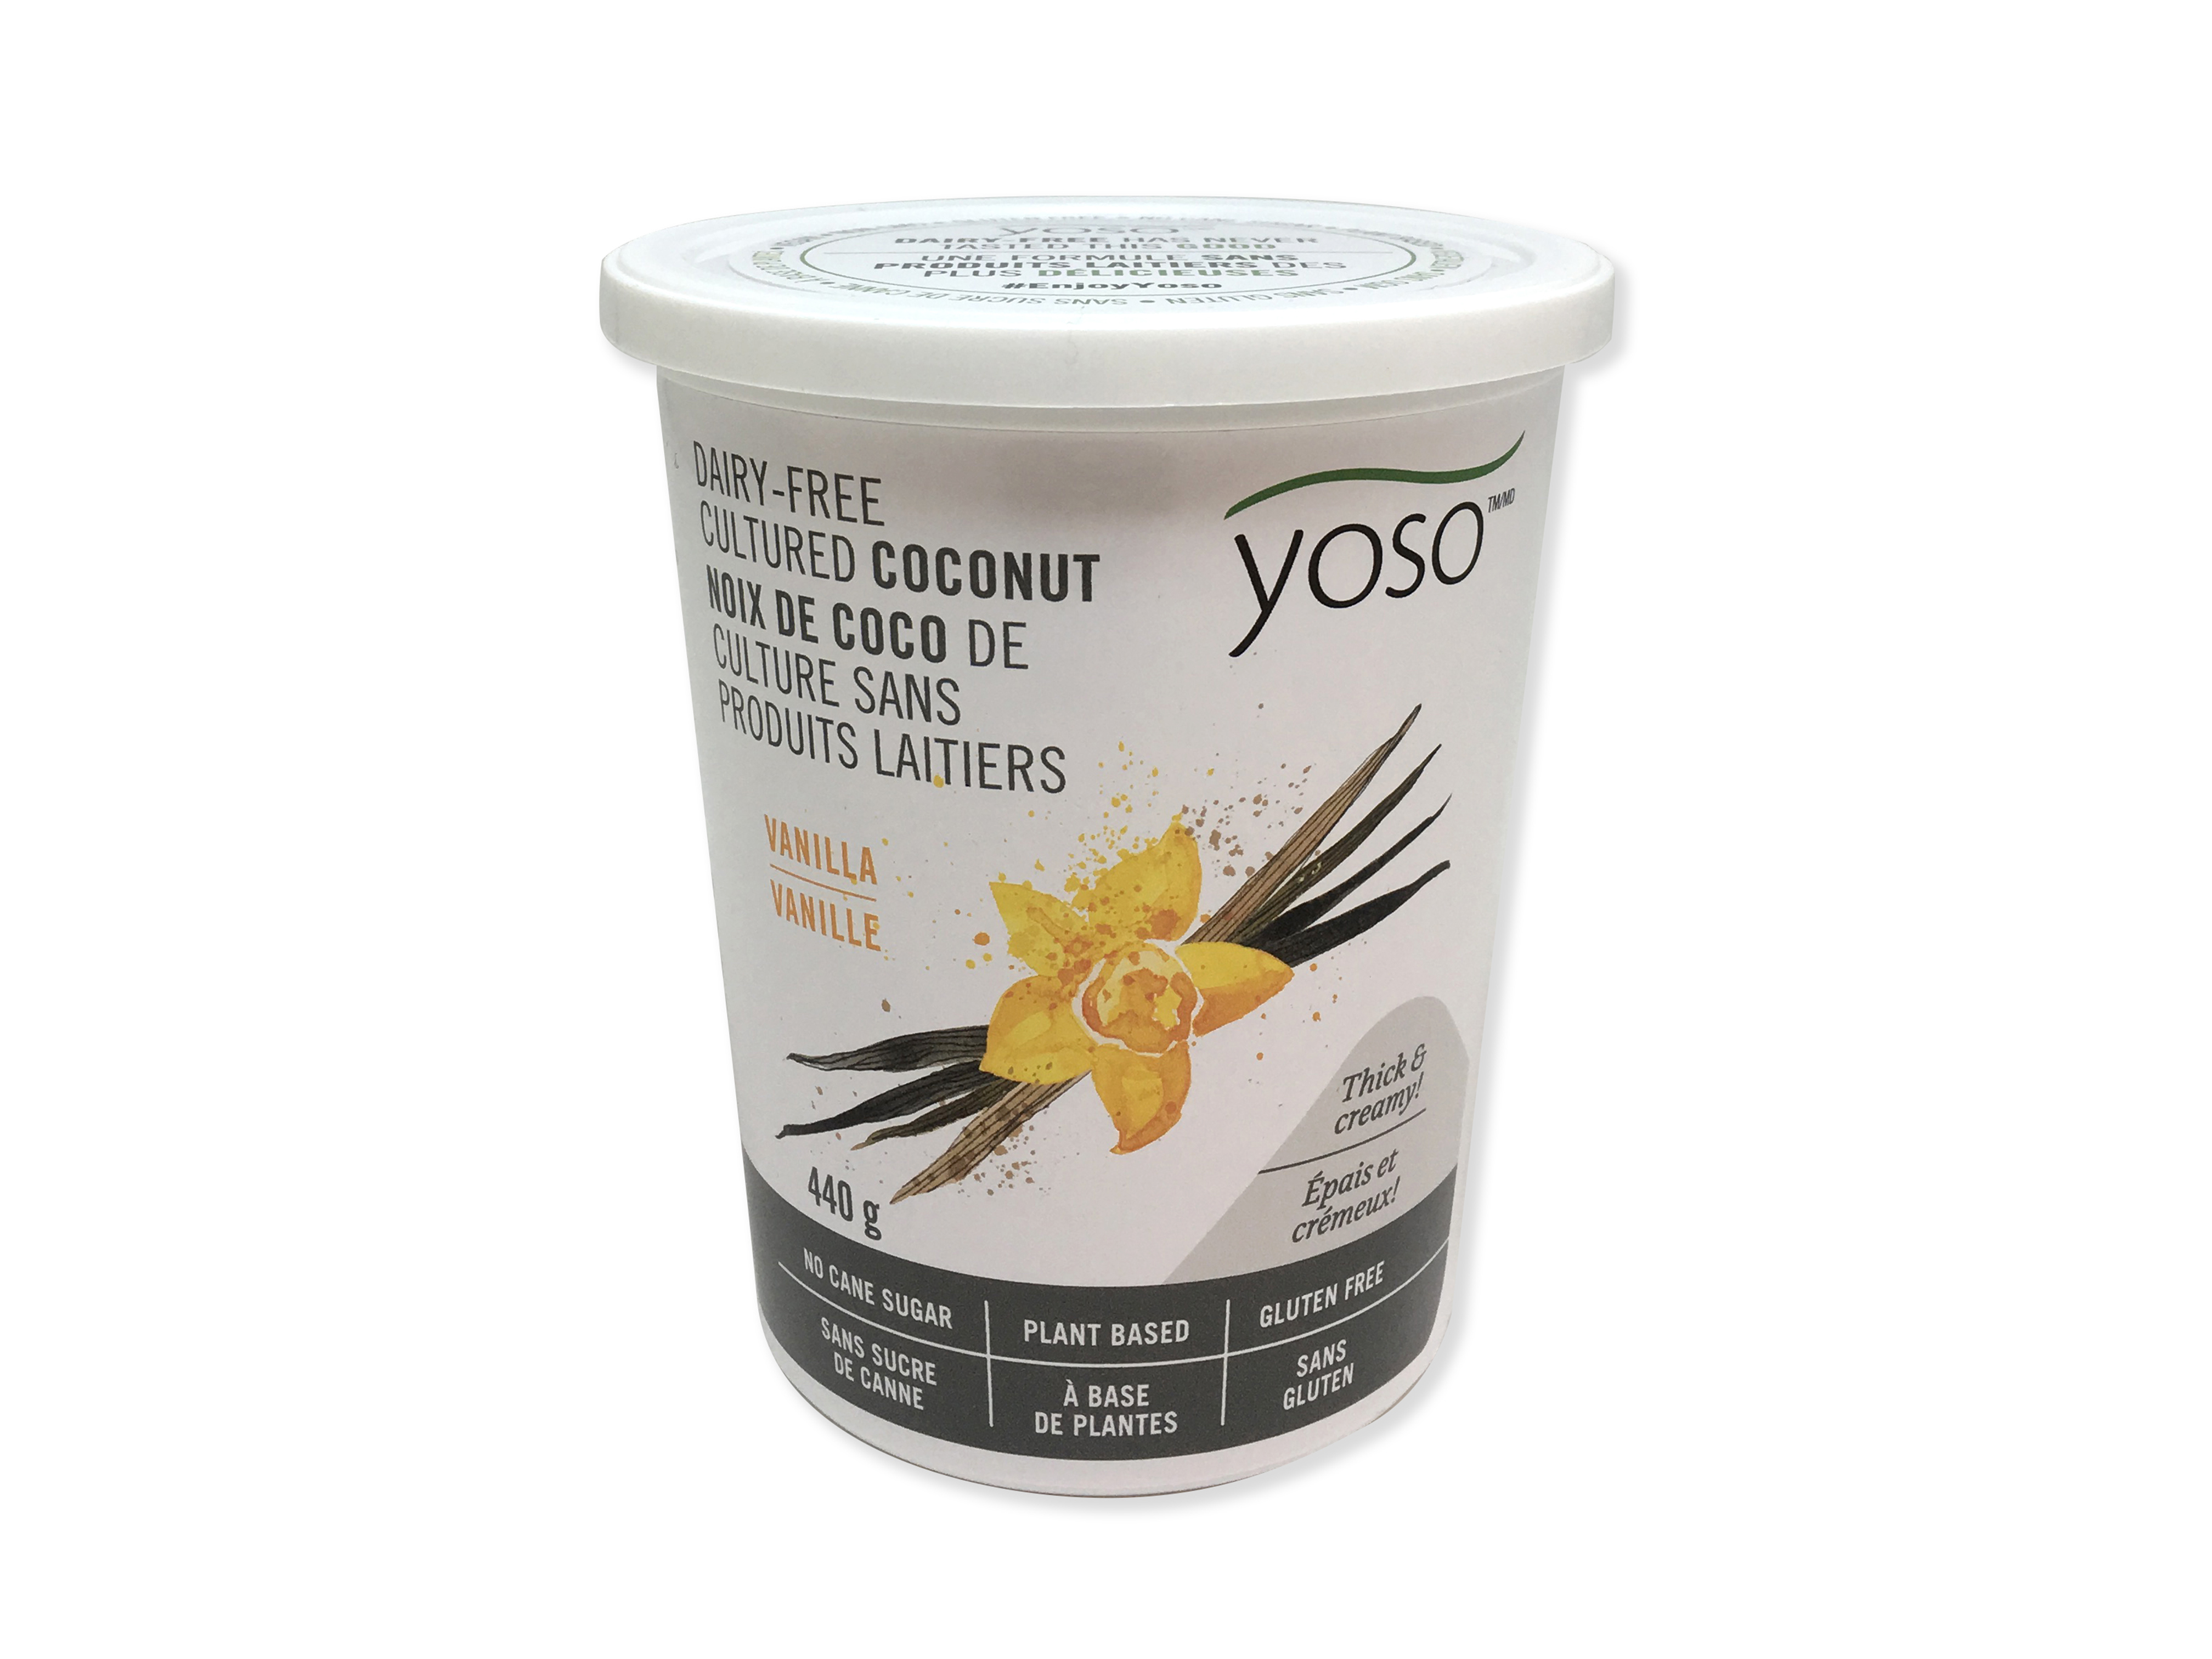 https://0901.nccdn.net/4_2/000/000/00f/745/Yoso-diary-free-cultured-coconut_-Vanilla-.jpg